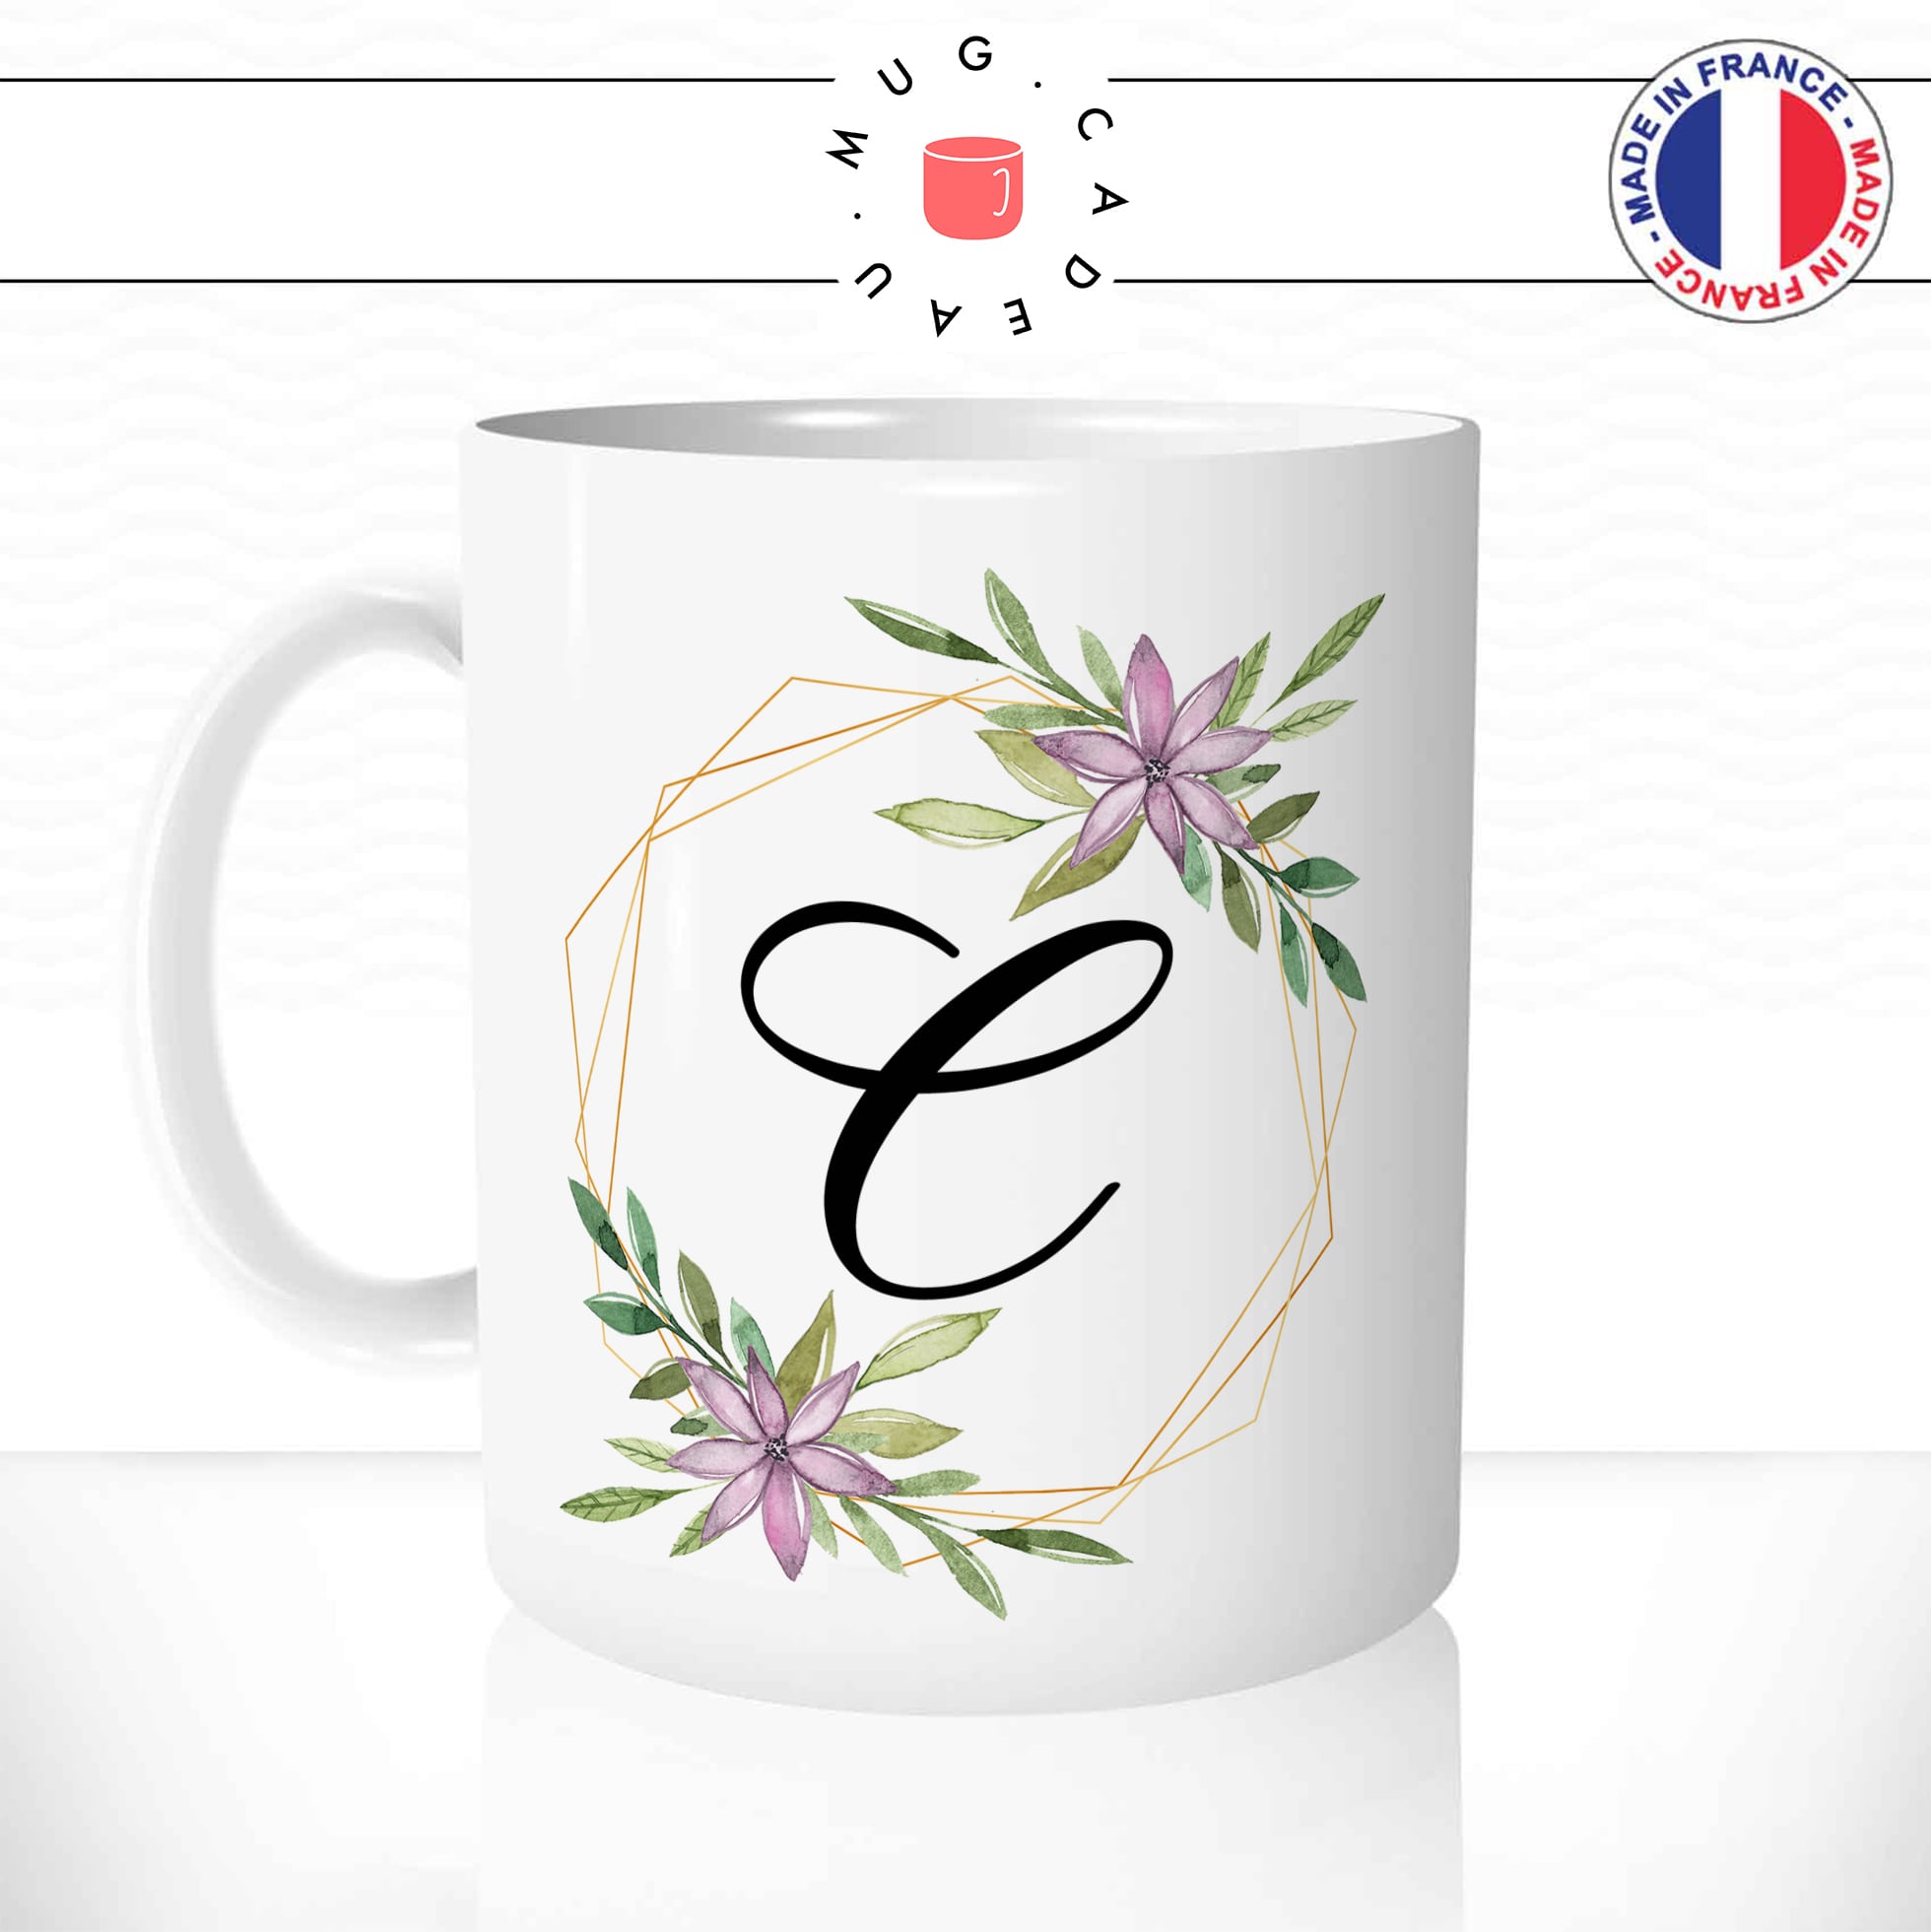 mug-tasse-initiale-fleurs-prénom-nom-lettre-c-flower-fun-matin-café-thé-mugs-tasses-idée-cadeau-original-personnalisée-min